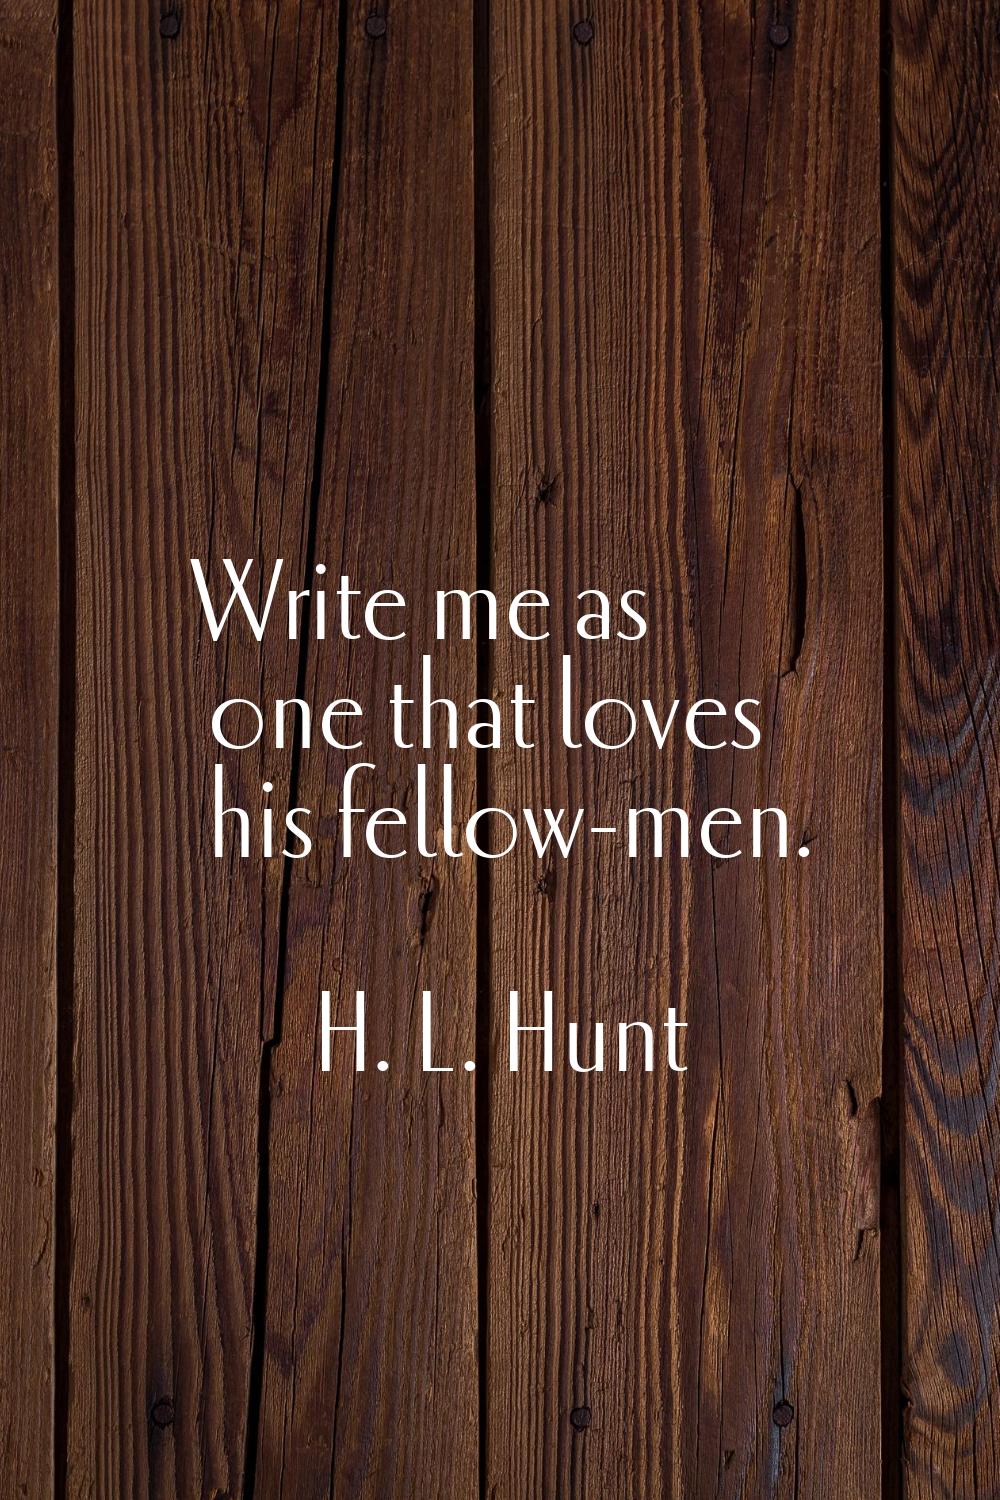 Write me as one that loves his fellow-men.